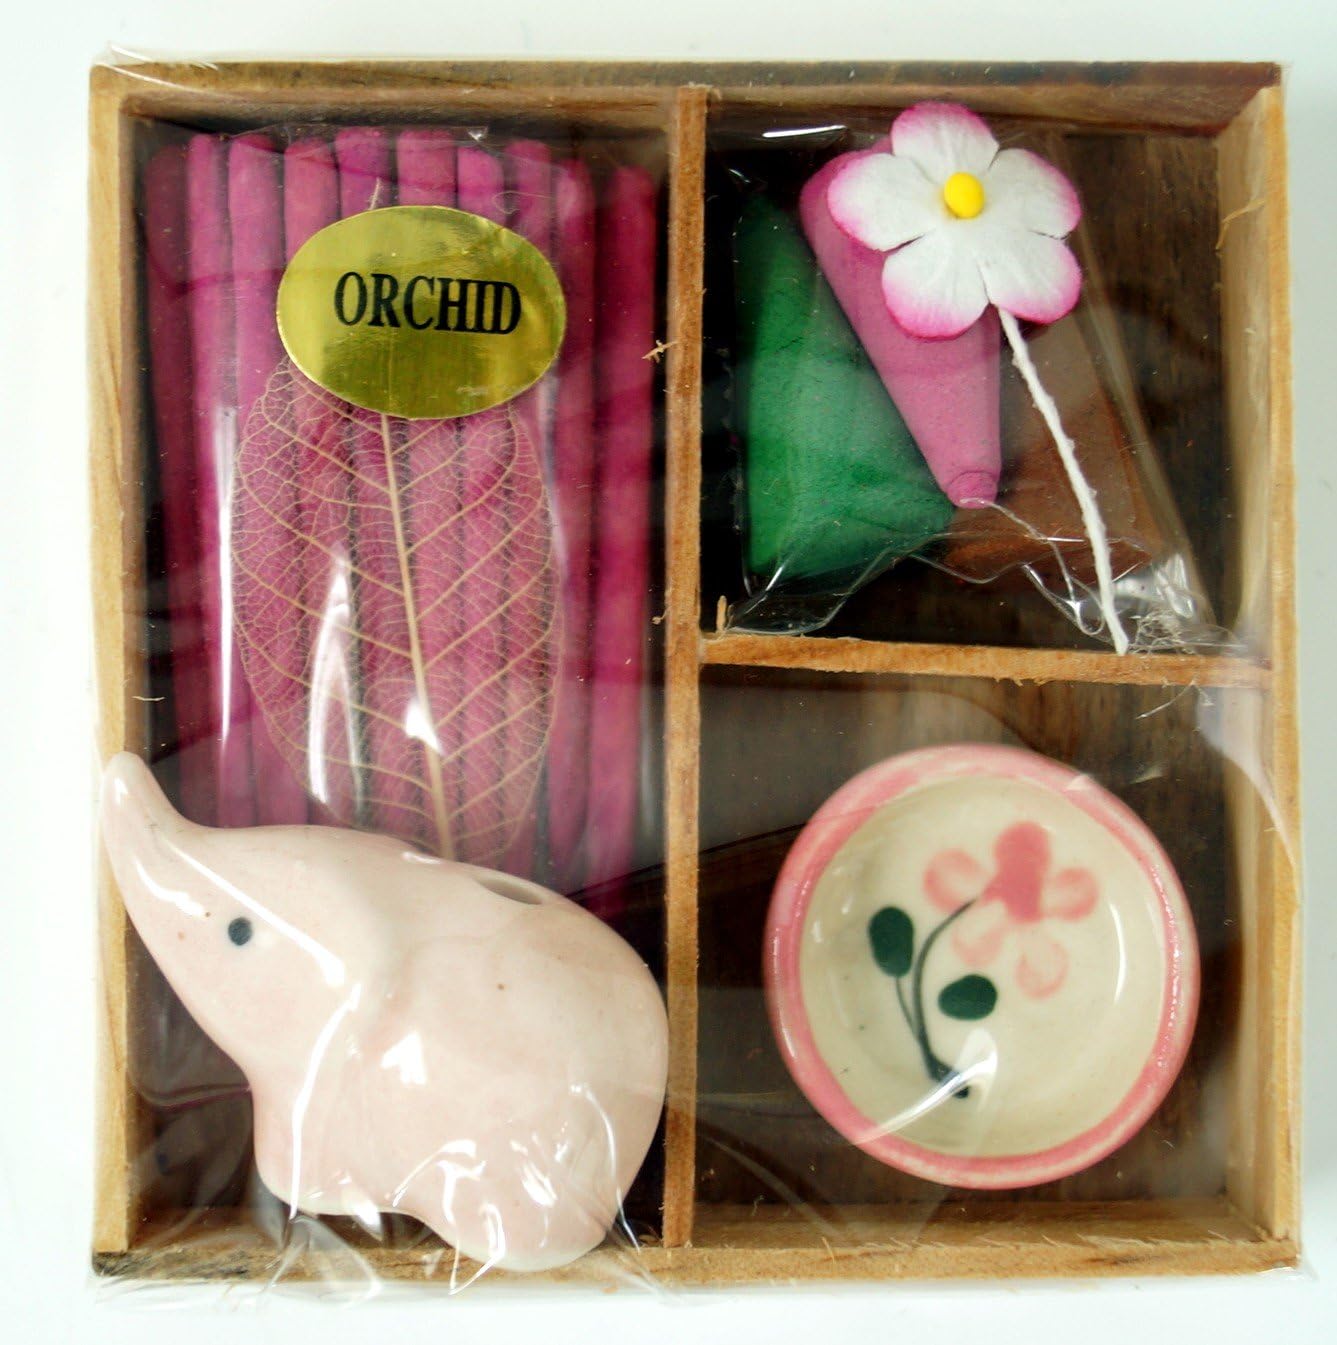 GURU SHOP Incense & Fragrance Set - Jasmine, Green, 2 x 7 x 7 cm, Incense Sticks & Sets from Thailand